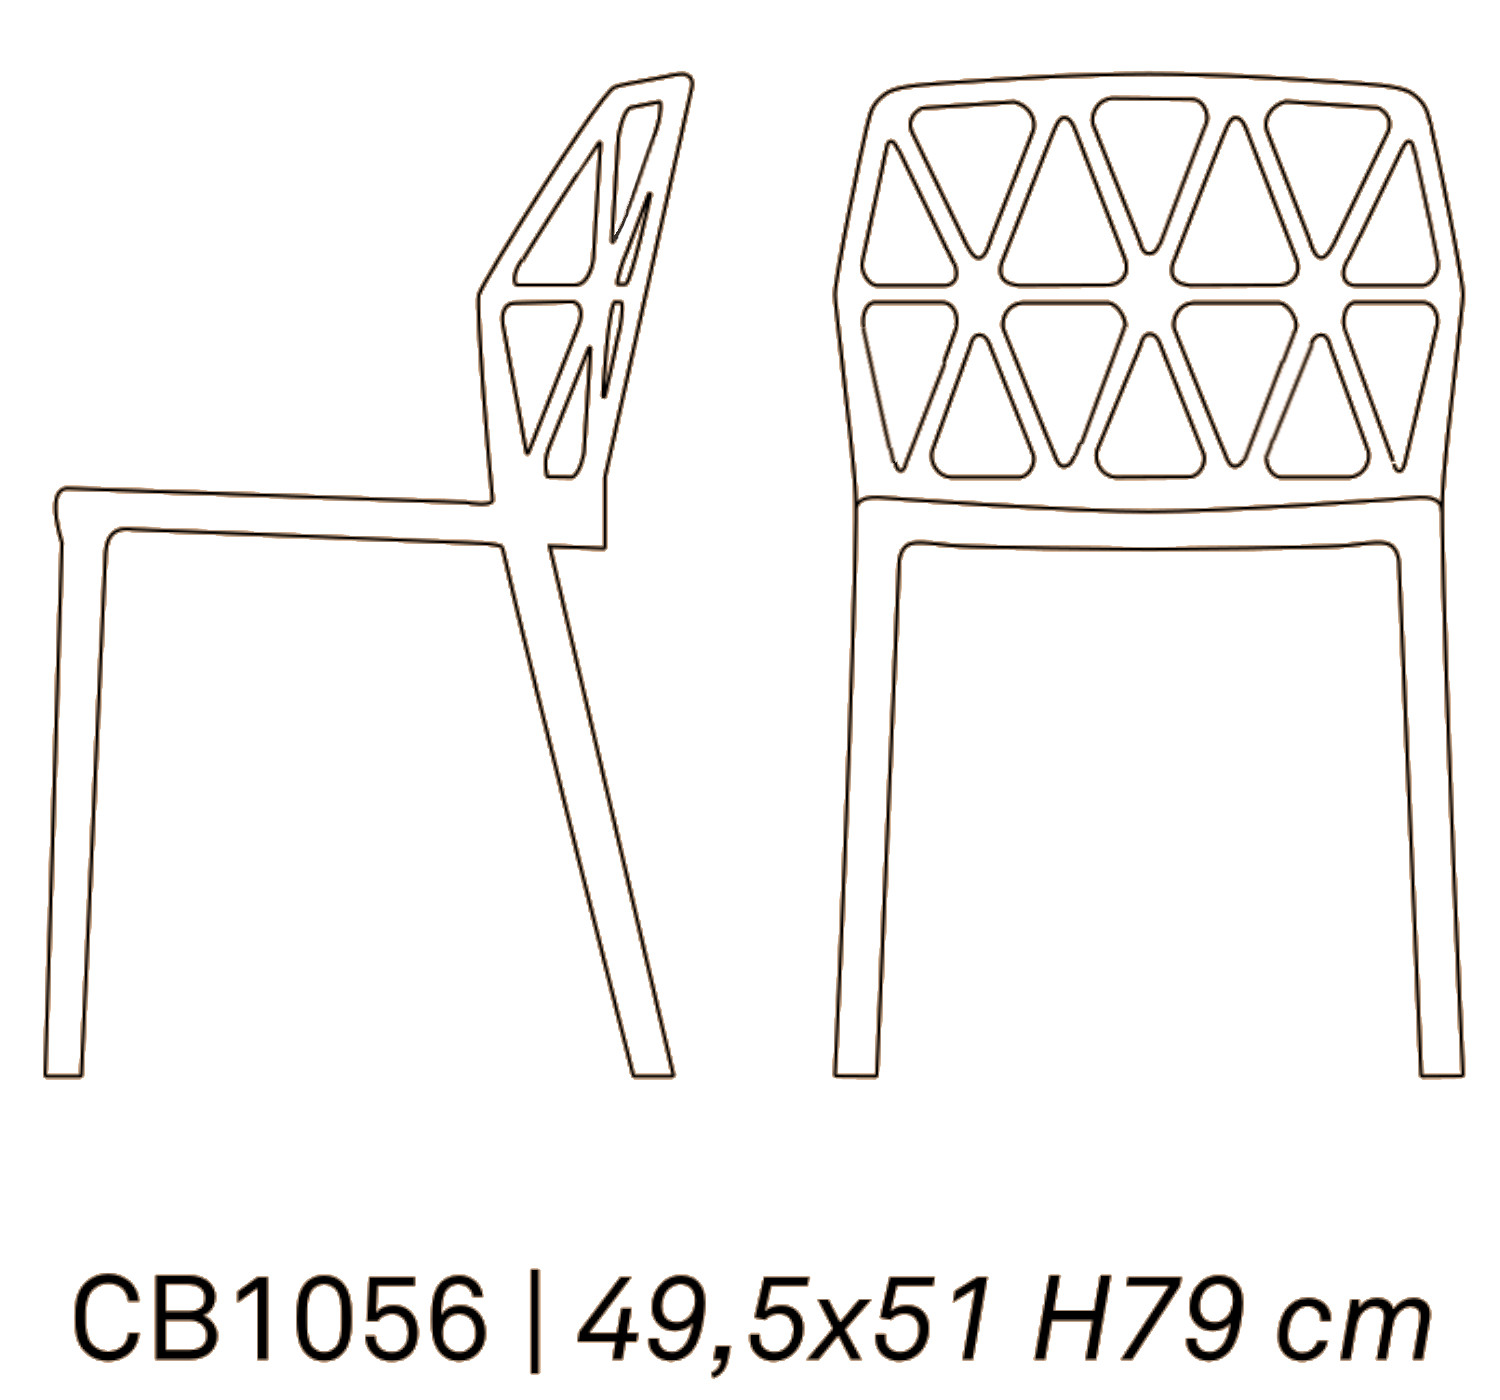 ALCHEMIA CB/1056 | Chairs | Seats | CONNUBIA - Masonionline